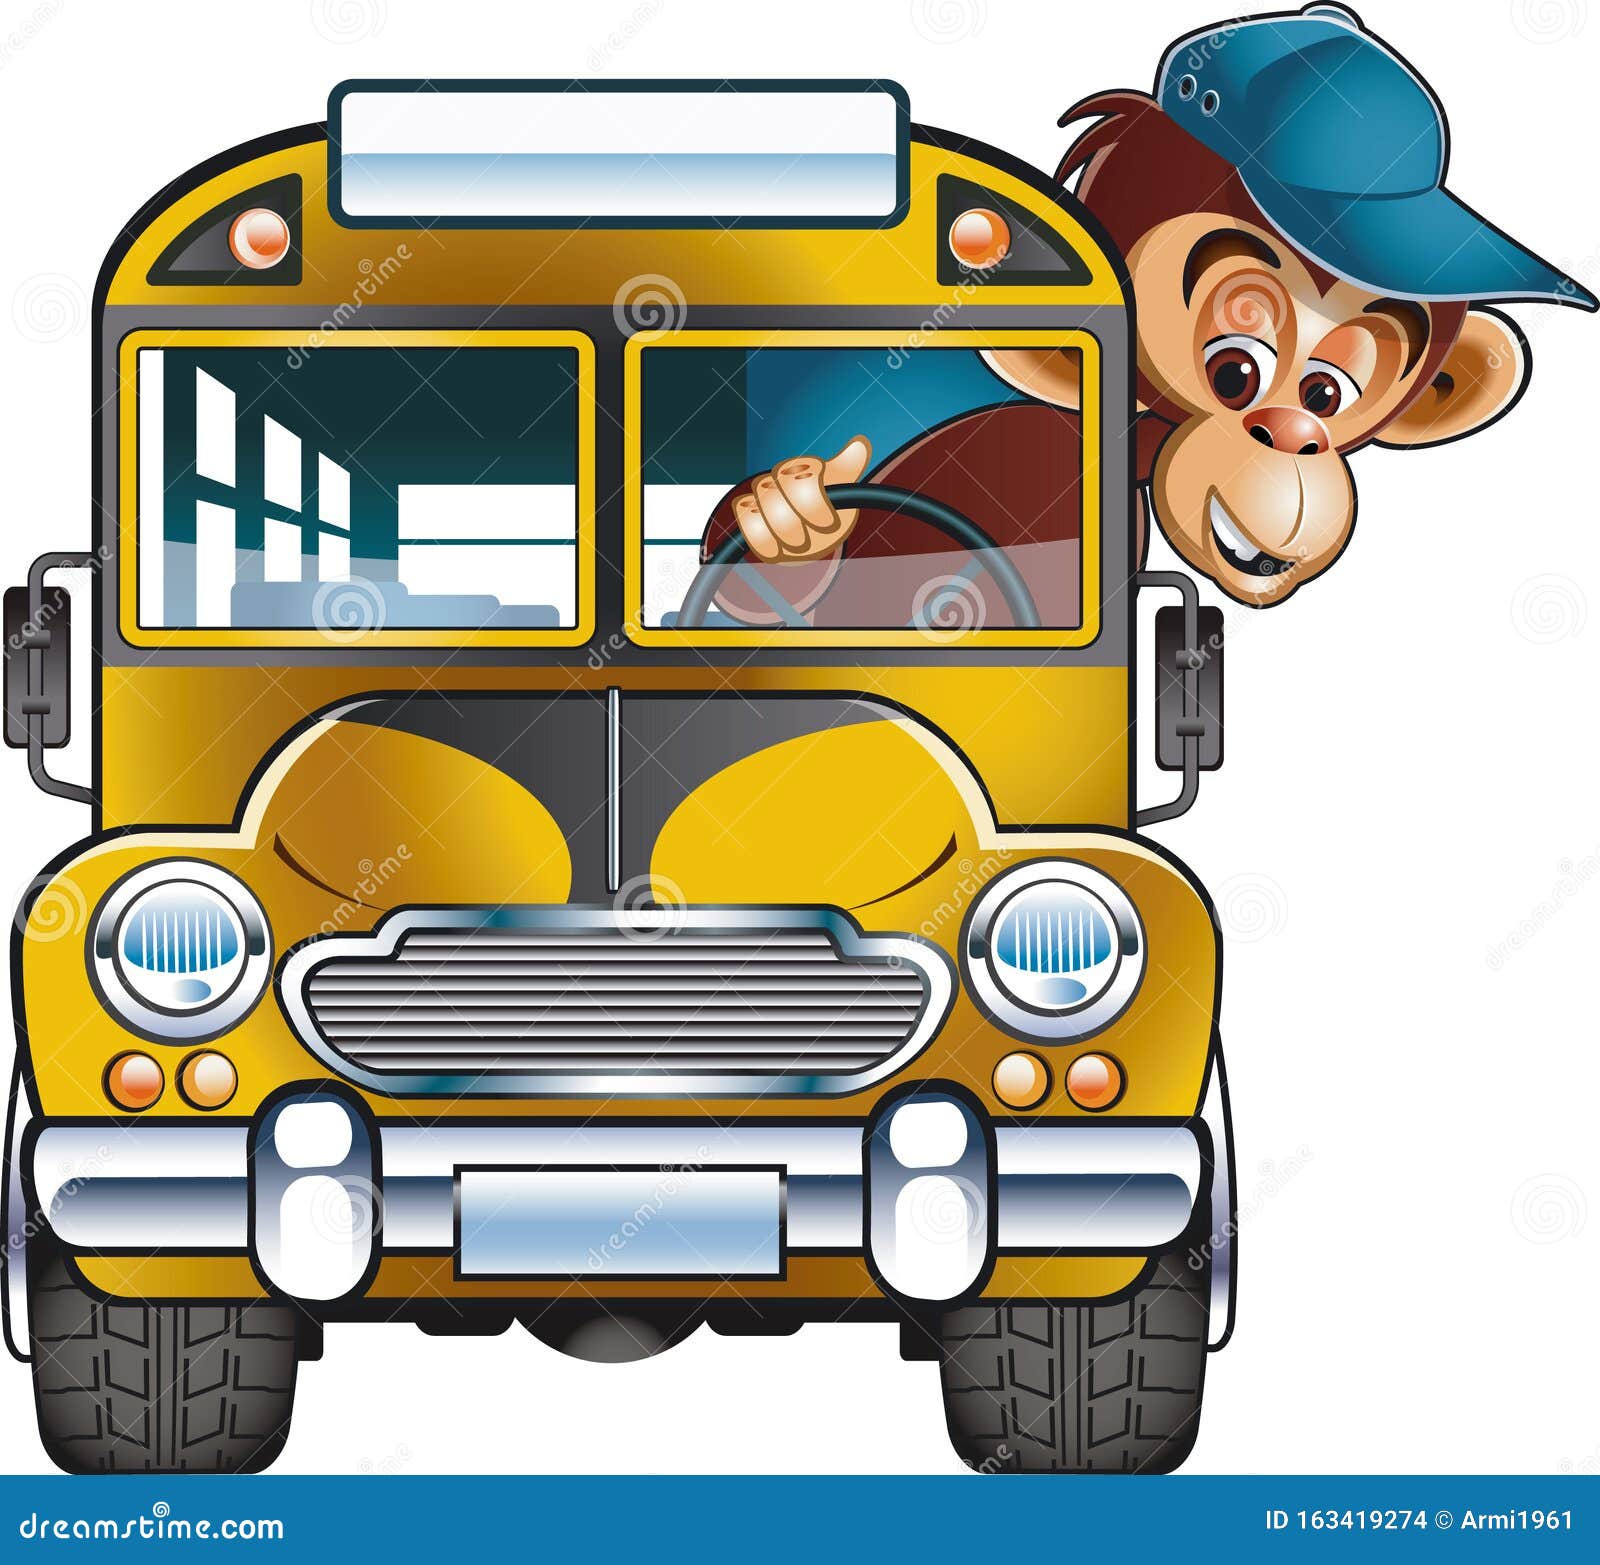 monkey-driving-bus-editable-scaleable-vector-illustration-163419274.jpg